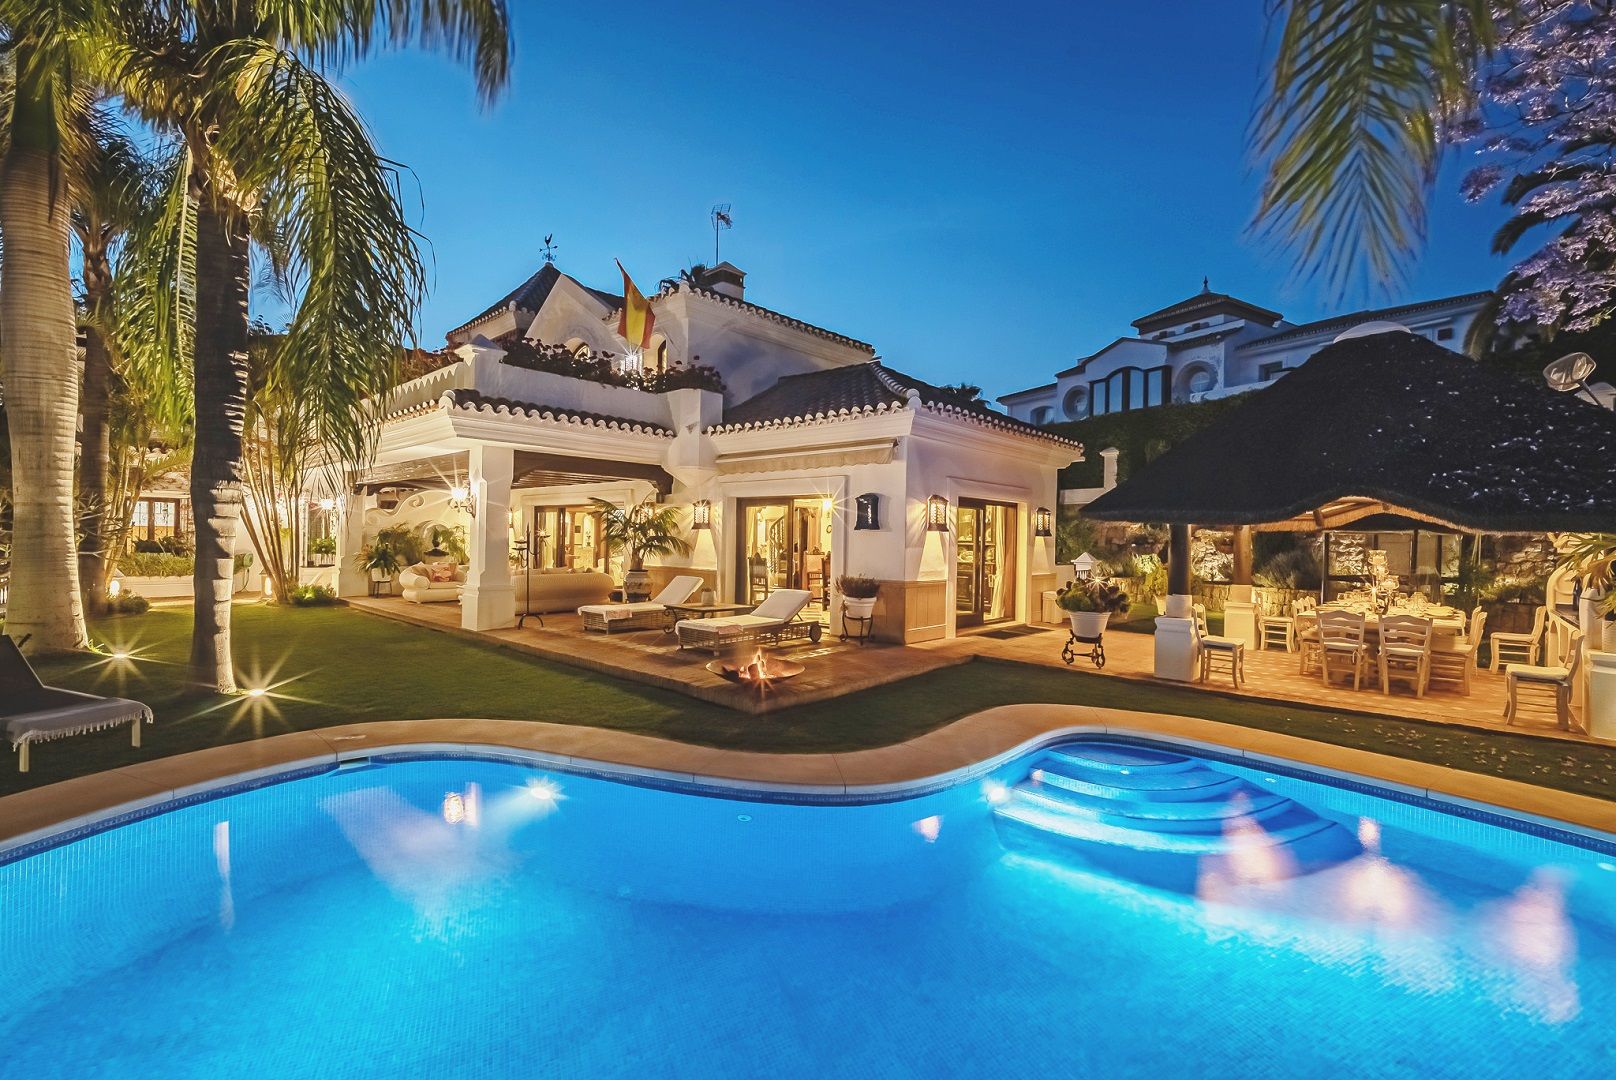 Luxury Andalusian style villa beachside in Bahia de Marbella | Engel & Völkers Marbella